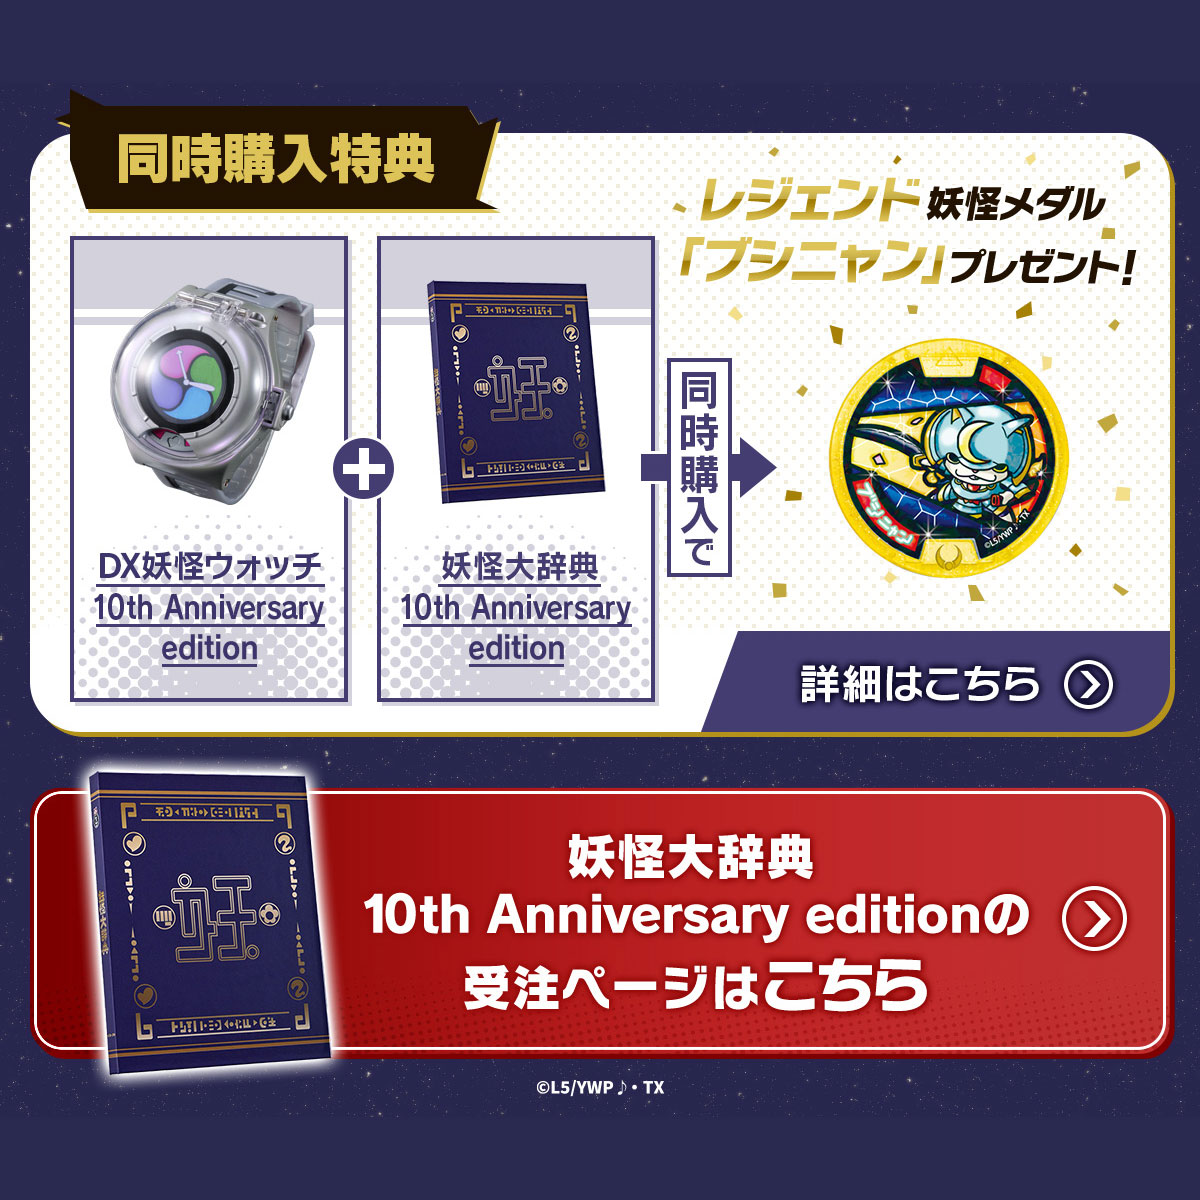 DX妖怪ウォッチ 10th Anniversary edition | 妖怪ウォッチおもちゃ ...